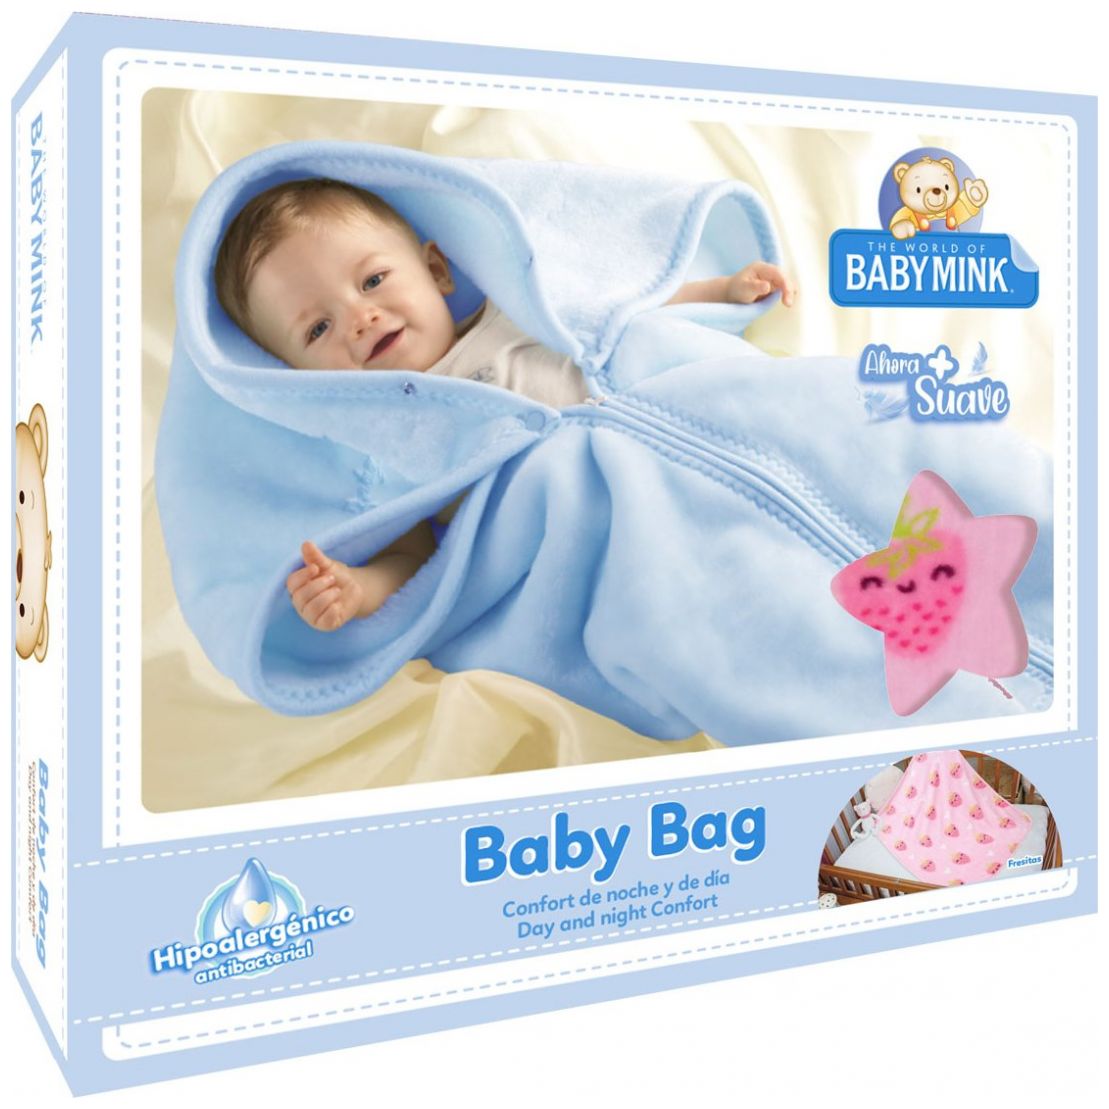 Cobertor para Bebé Baby Bag Figuras Baby Mink Modelo Bm071